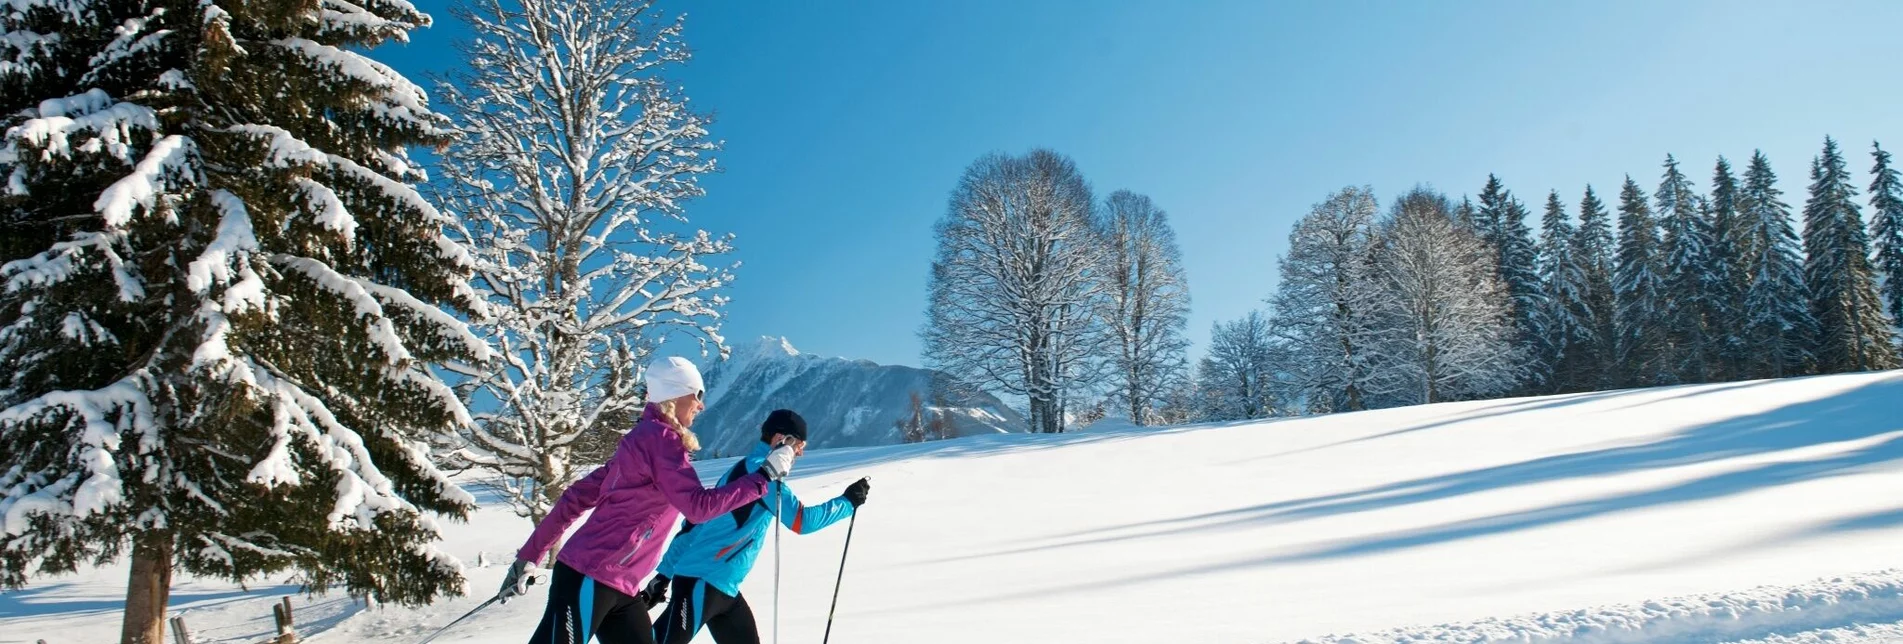 Cross-Country Skiing Standard Trail West - Touren-Impression #1 | © Tourismusverband Ramsau am Dachstein